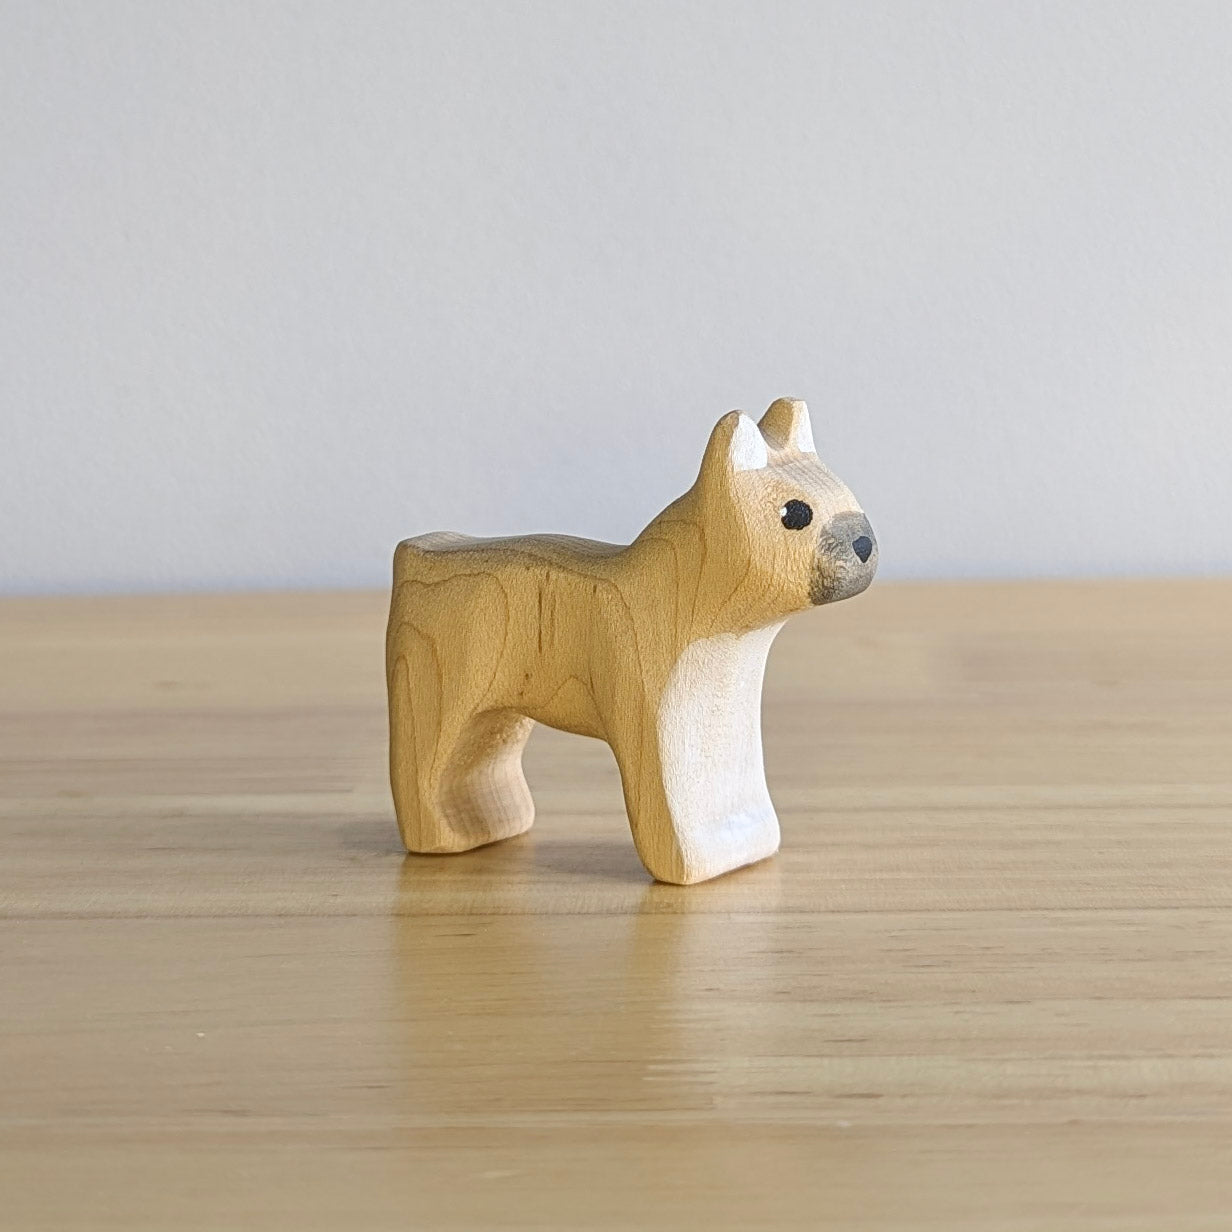 French Bulldog Wooden Toy